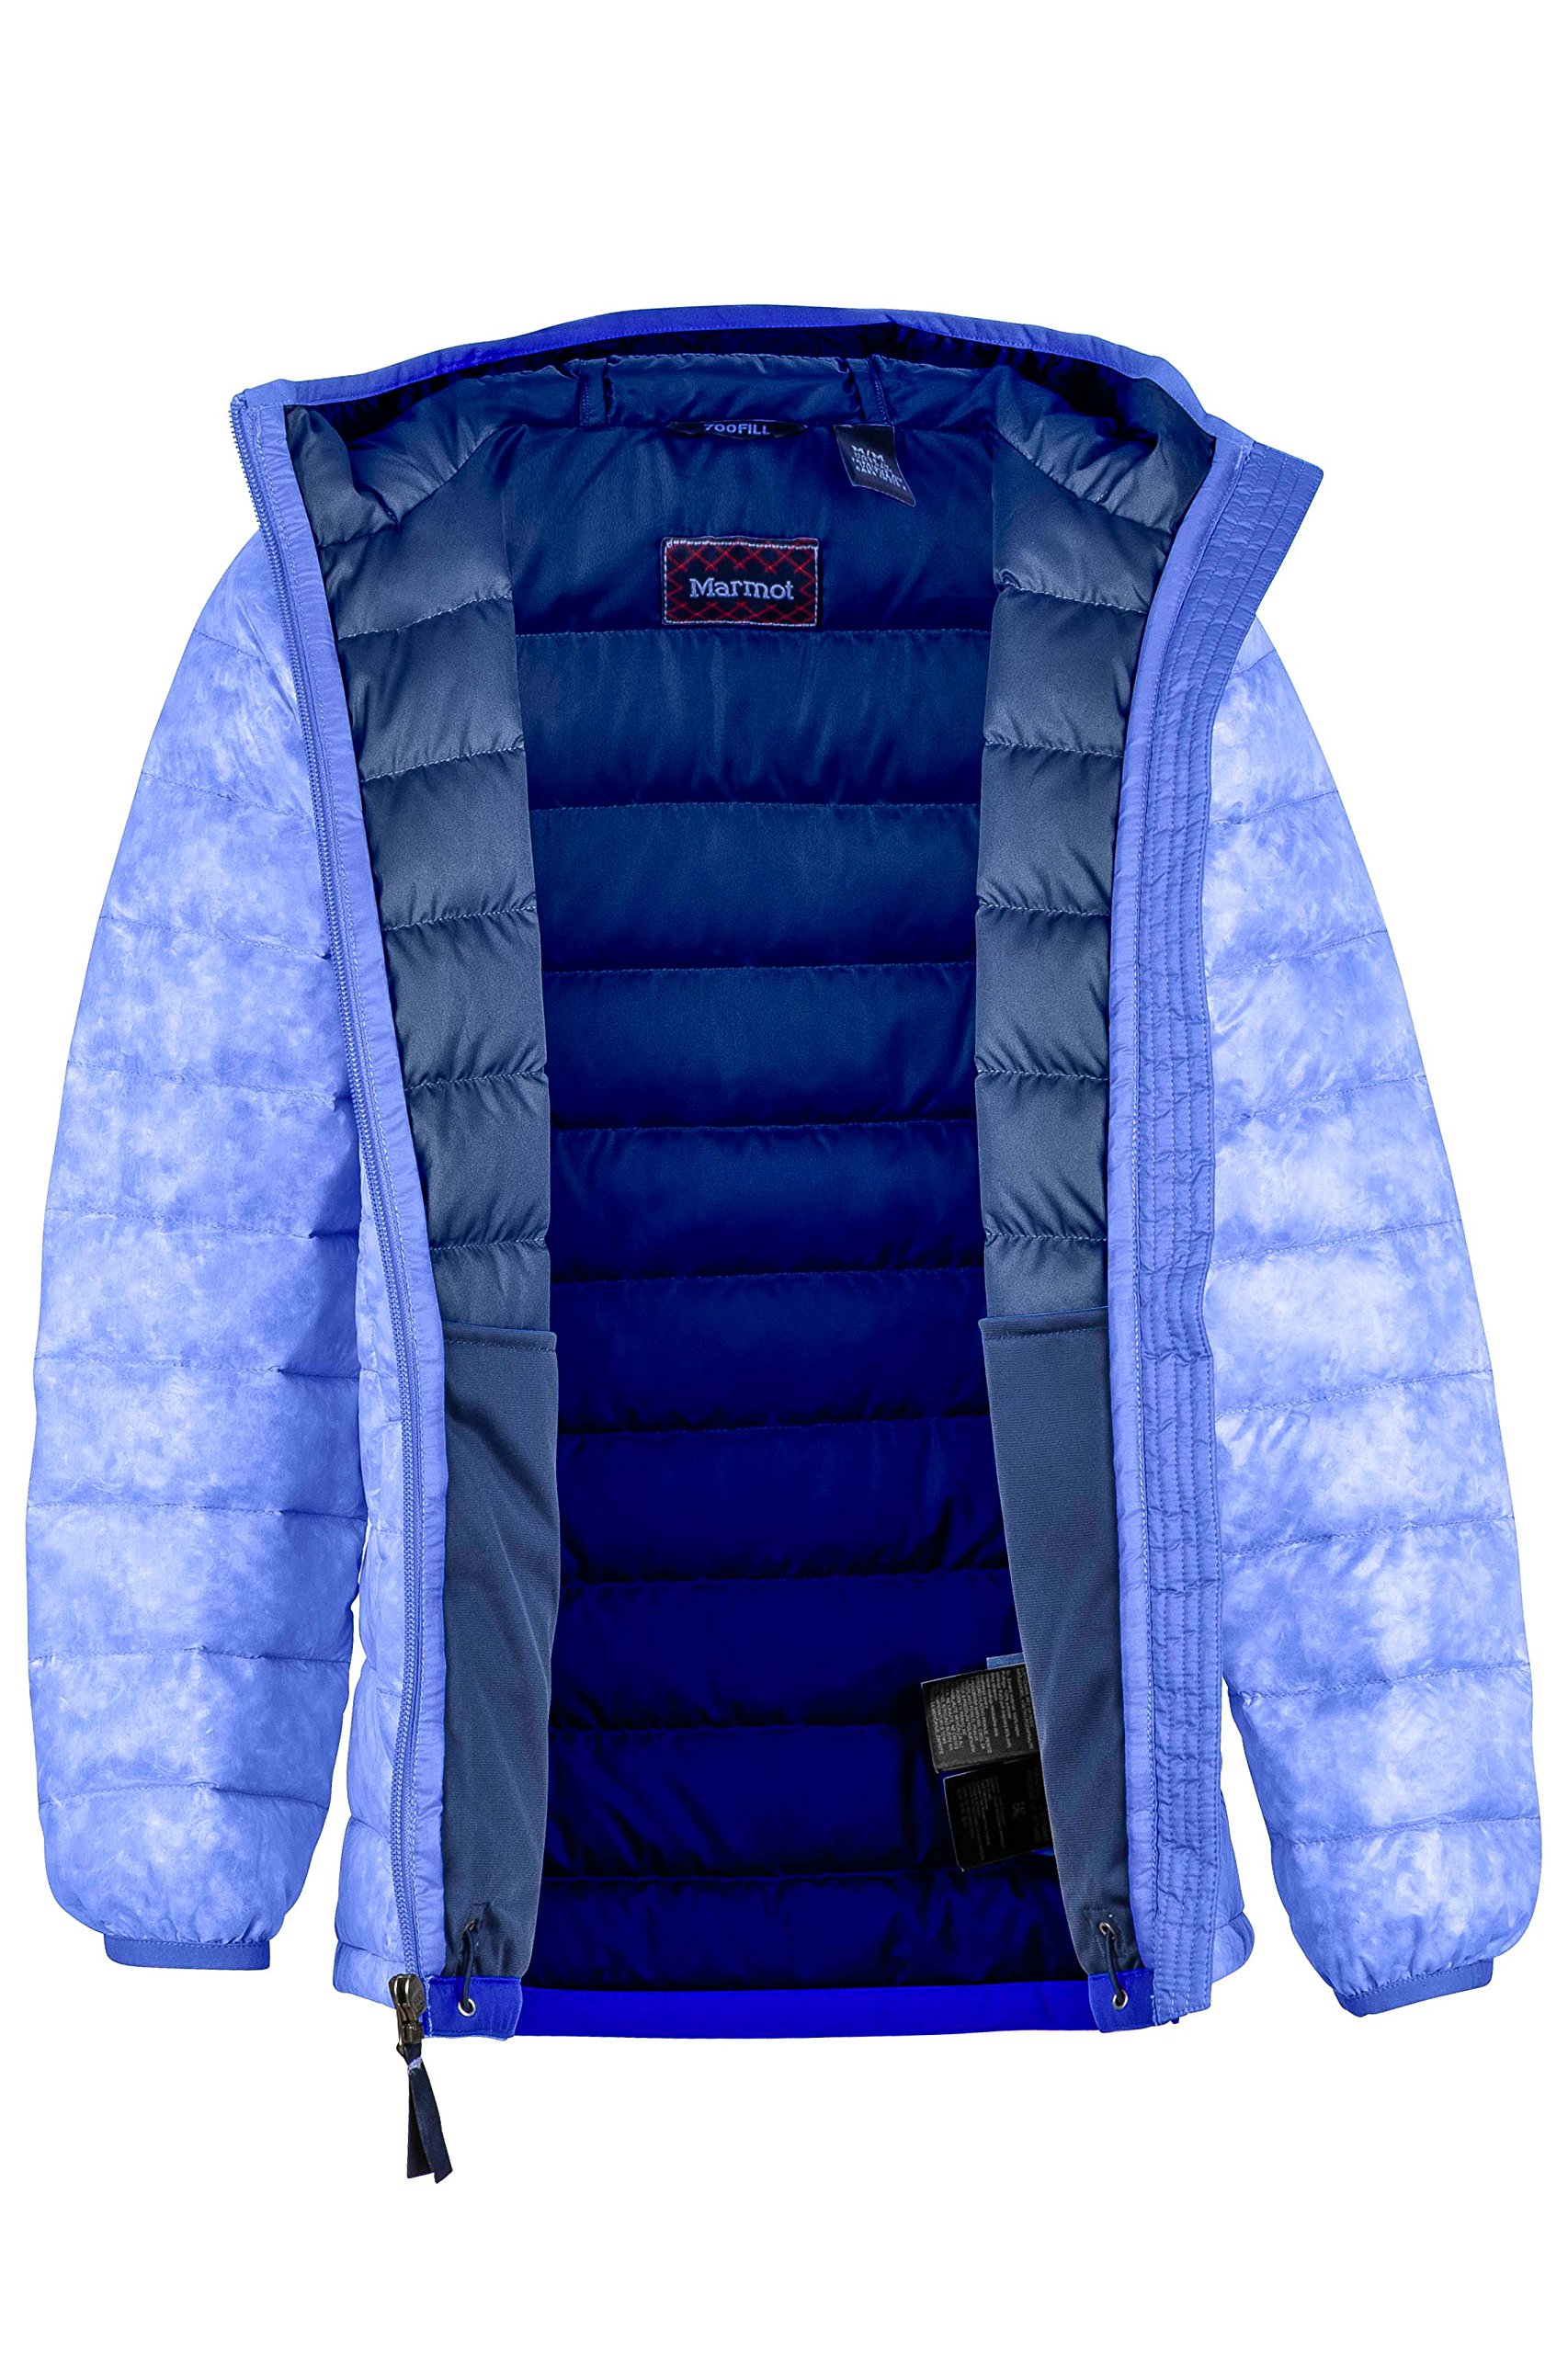 Marmot Girls' Nika Down Puffer Jacket, Fill Power 550